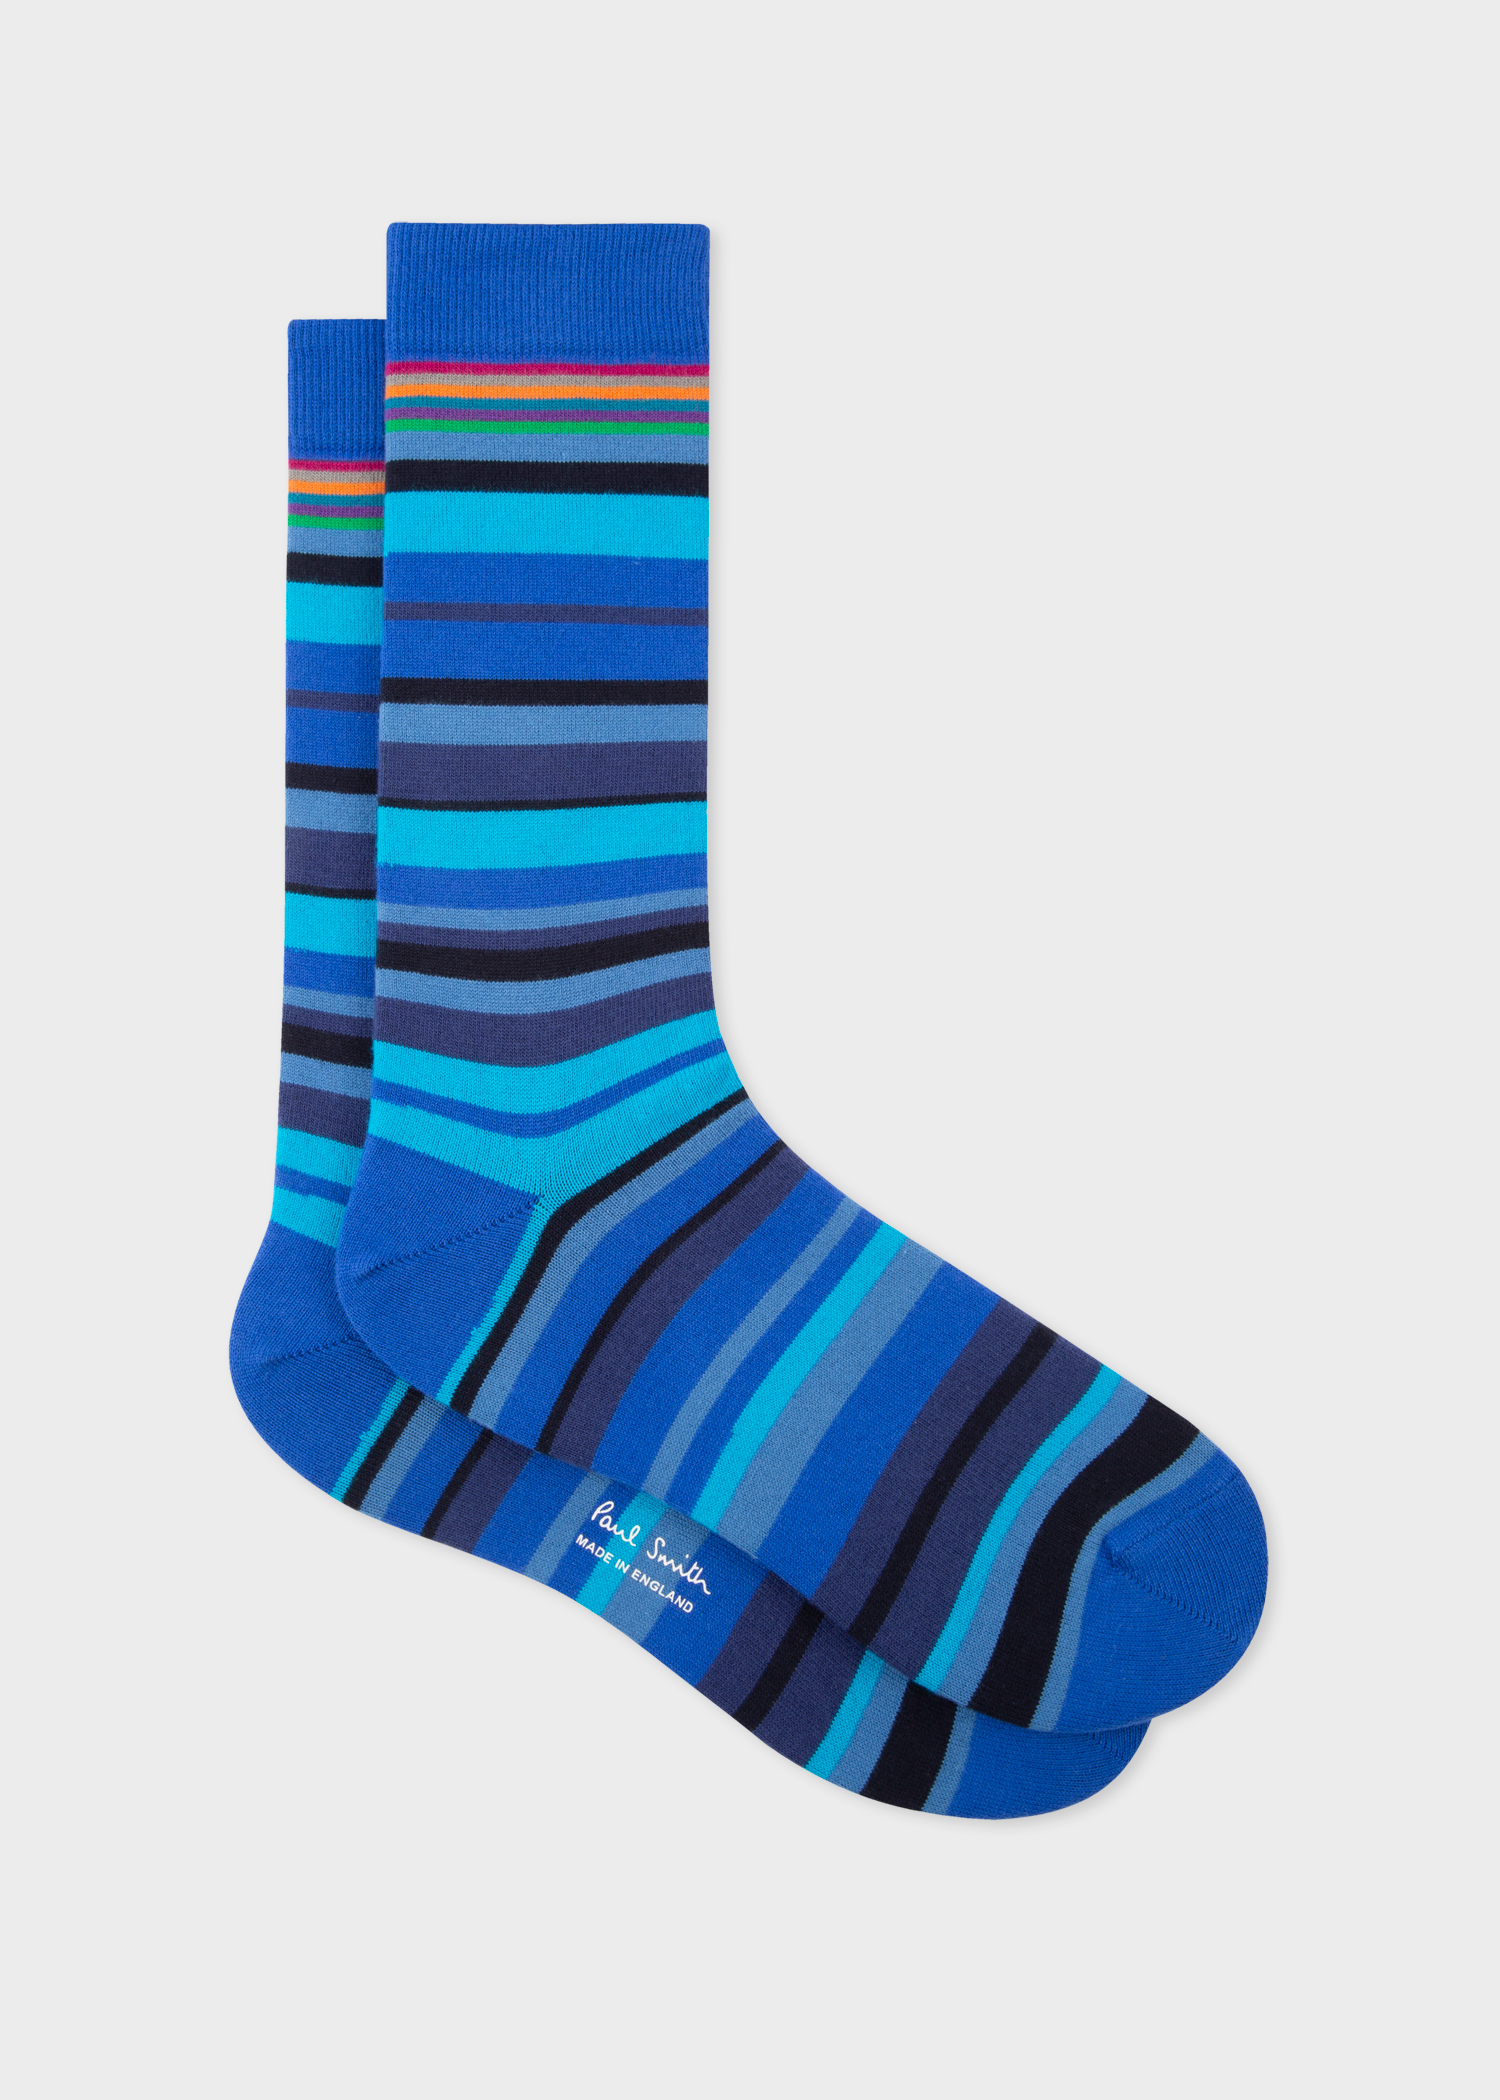 Front view - Paul Smith For University Of Nottingham - Men's Blue Stripe Cotton Socks 